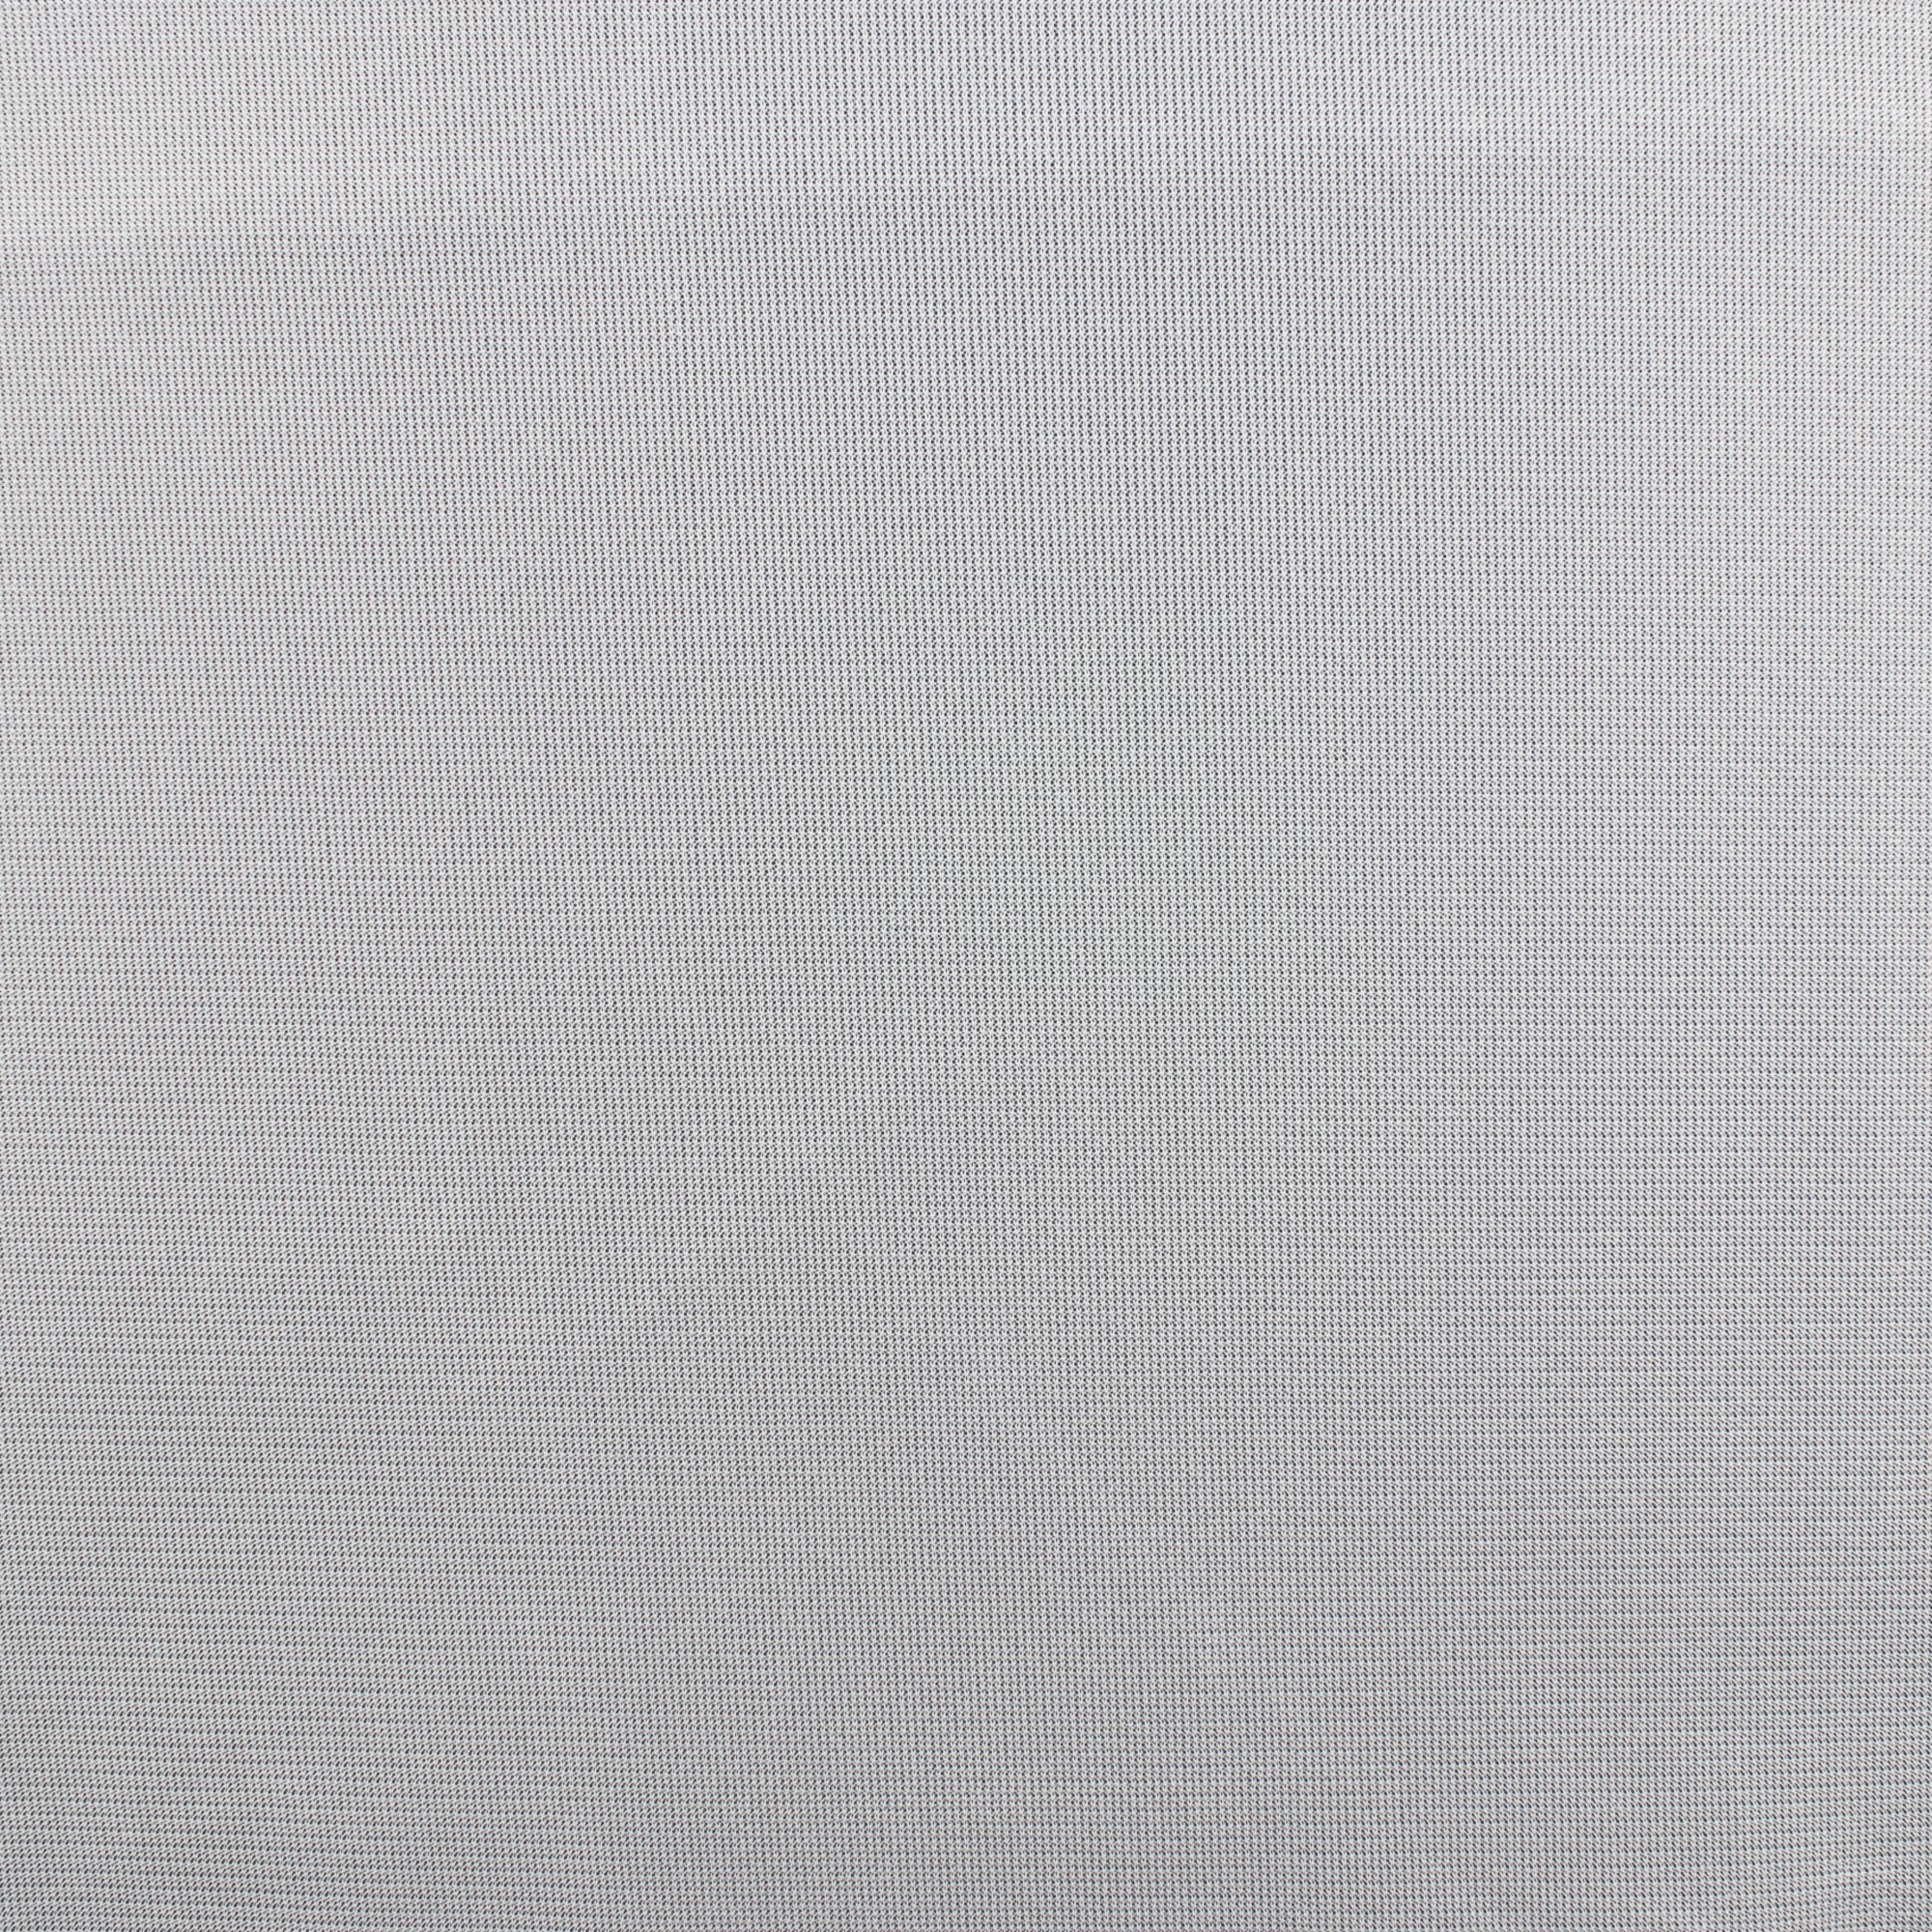 Pellon Easy-Knit Fusible Tricot Interfacing-White 19/20X25yd